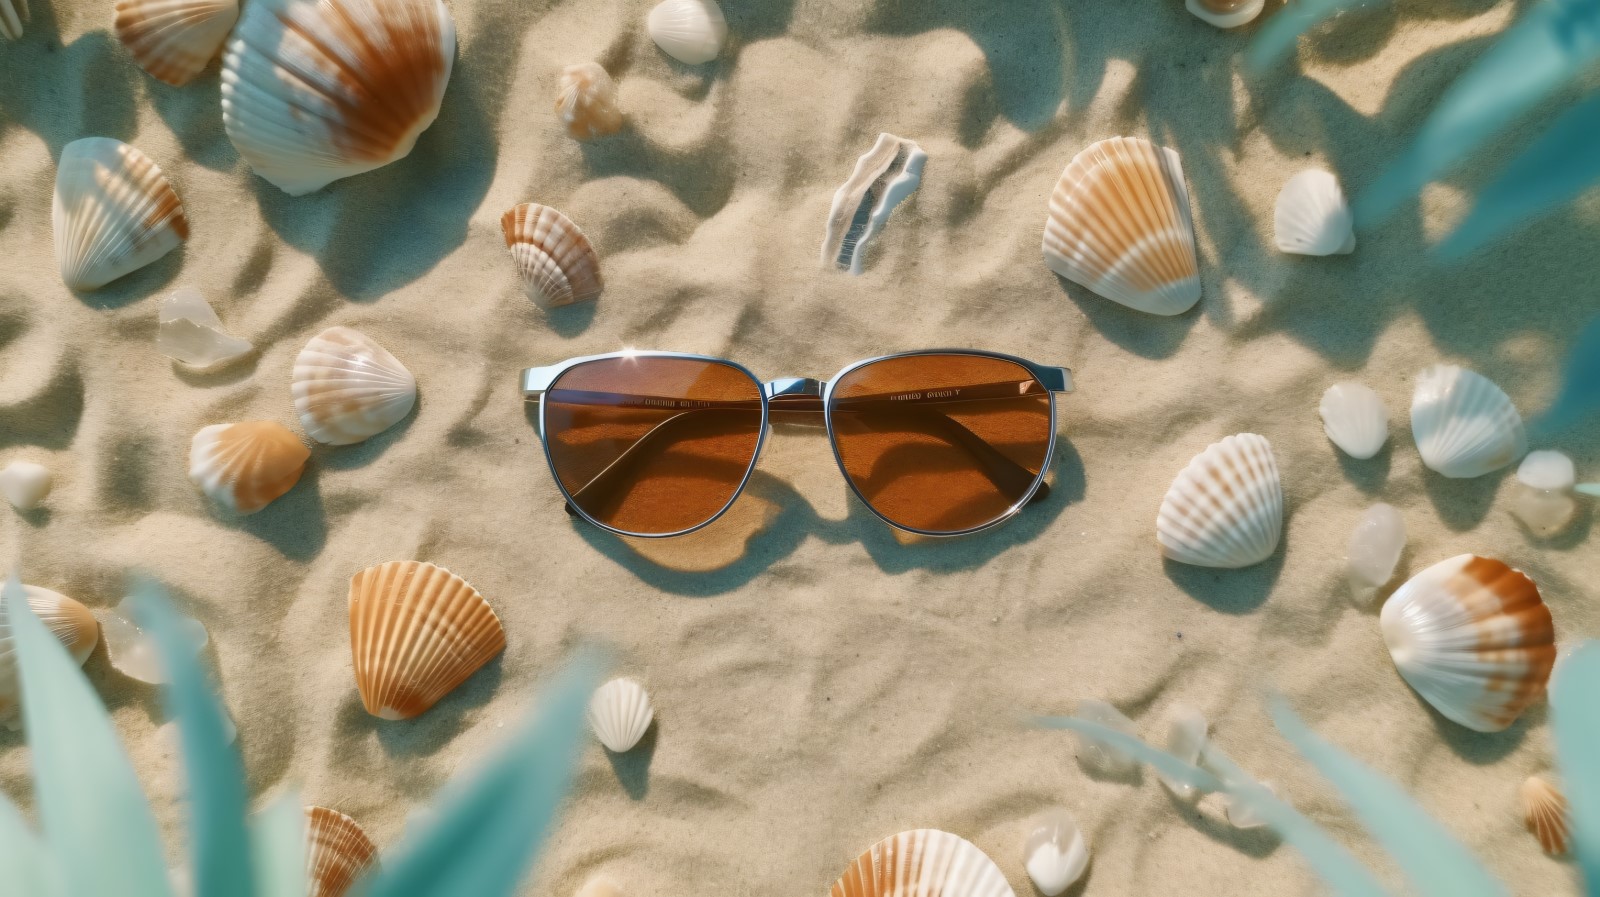 Sunglasses seashells and beach accessories on sandy beach 188